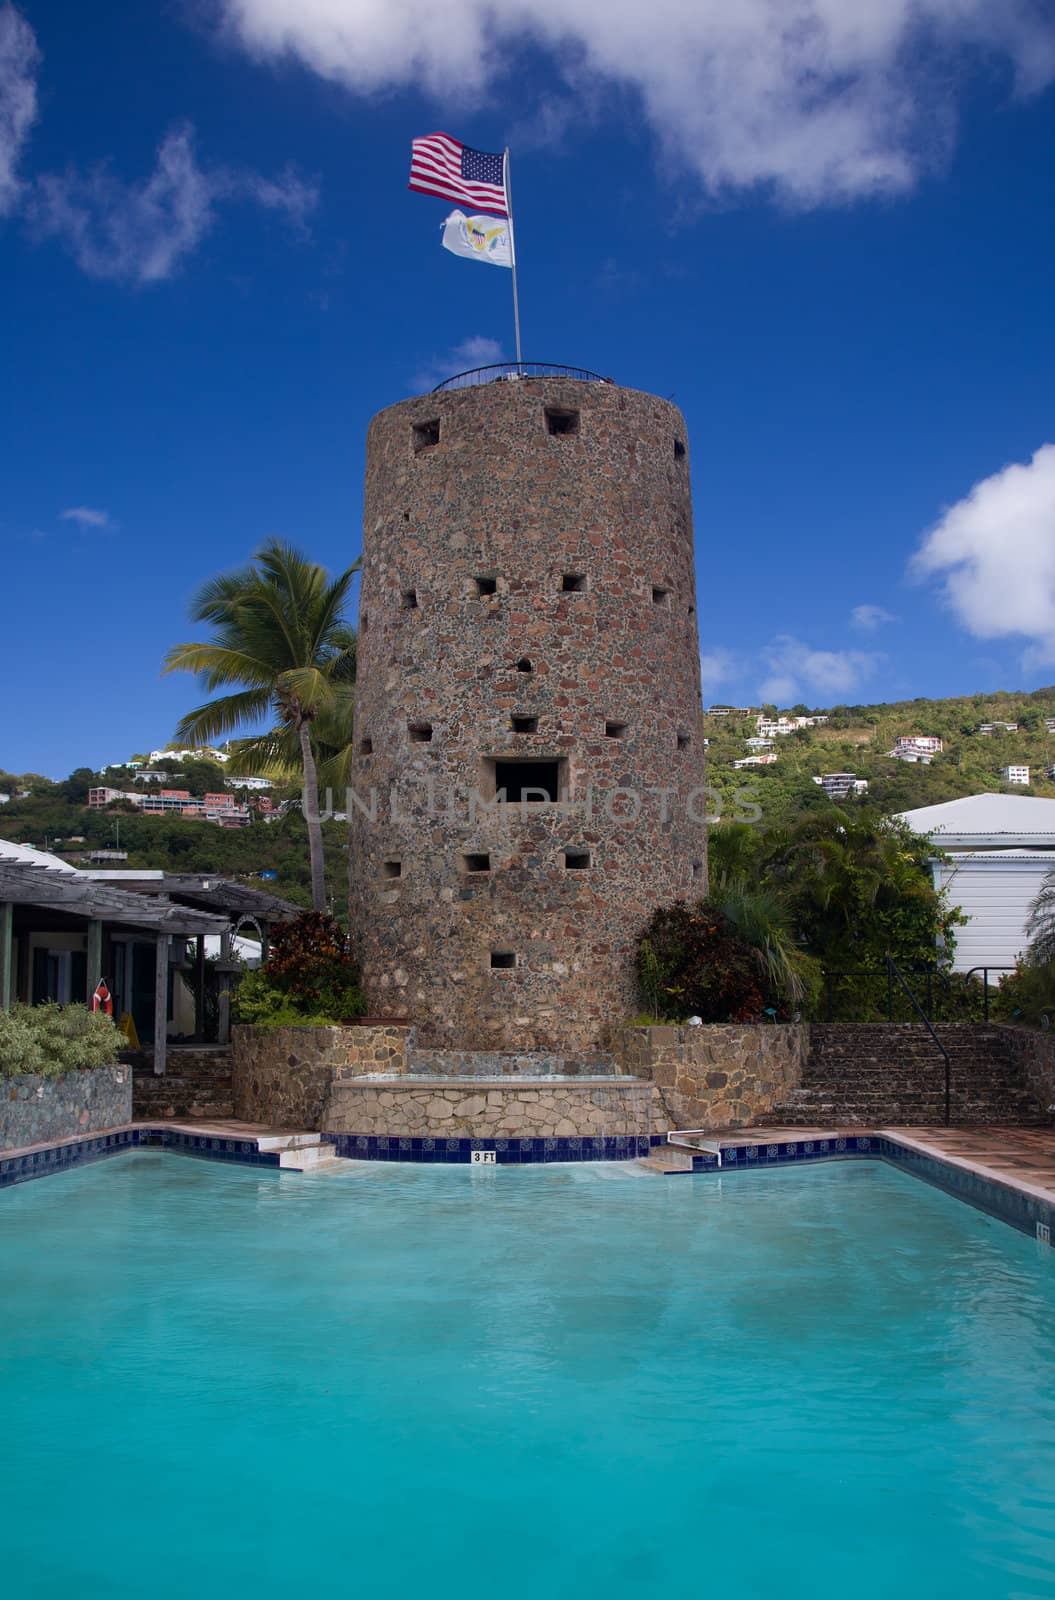 Blackbeards Tower in St Thomas by steheap